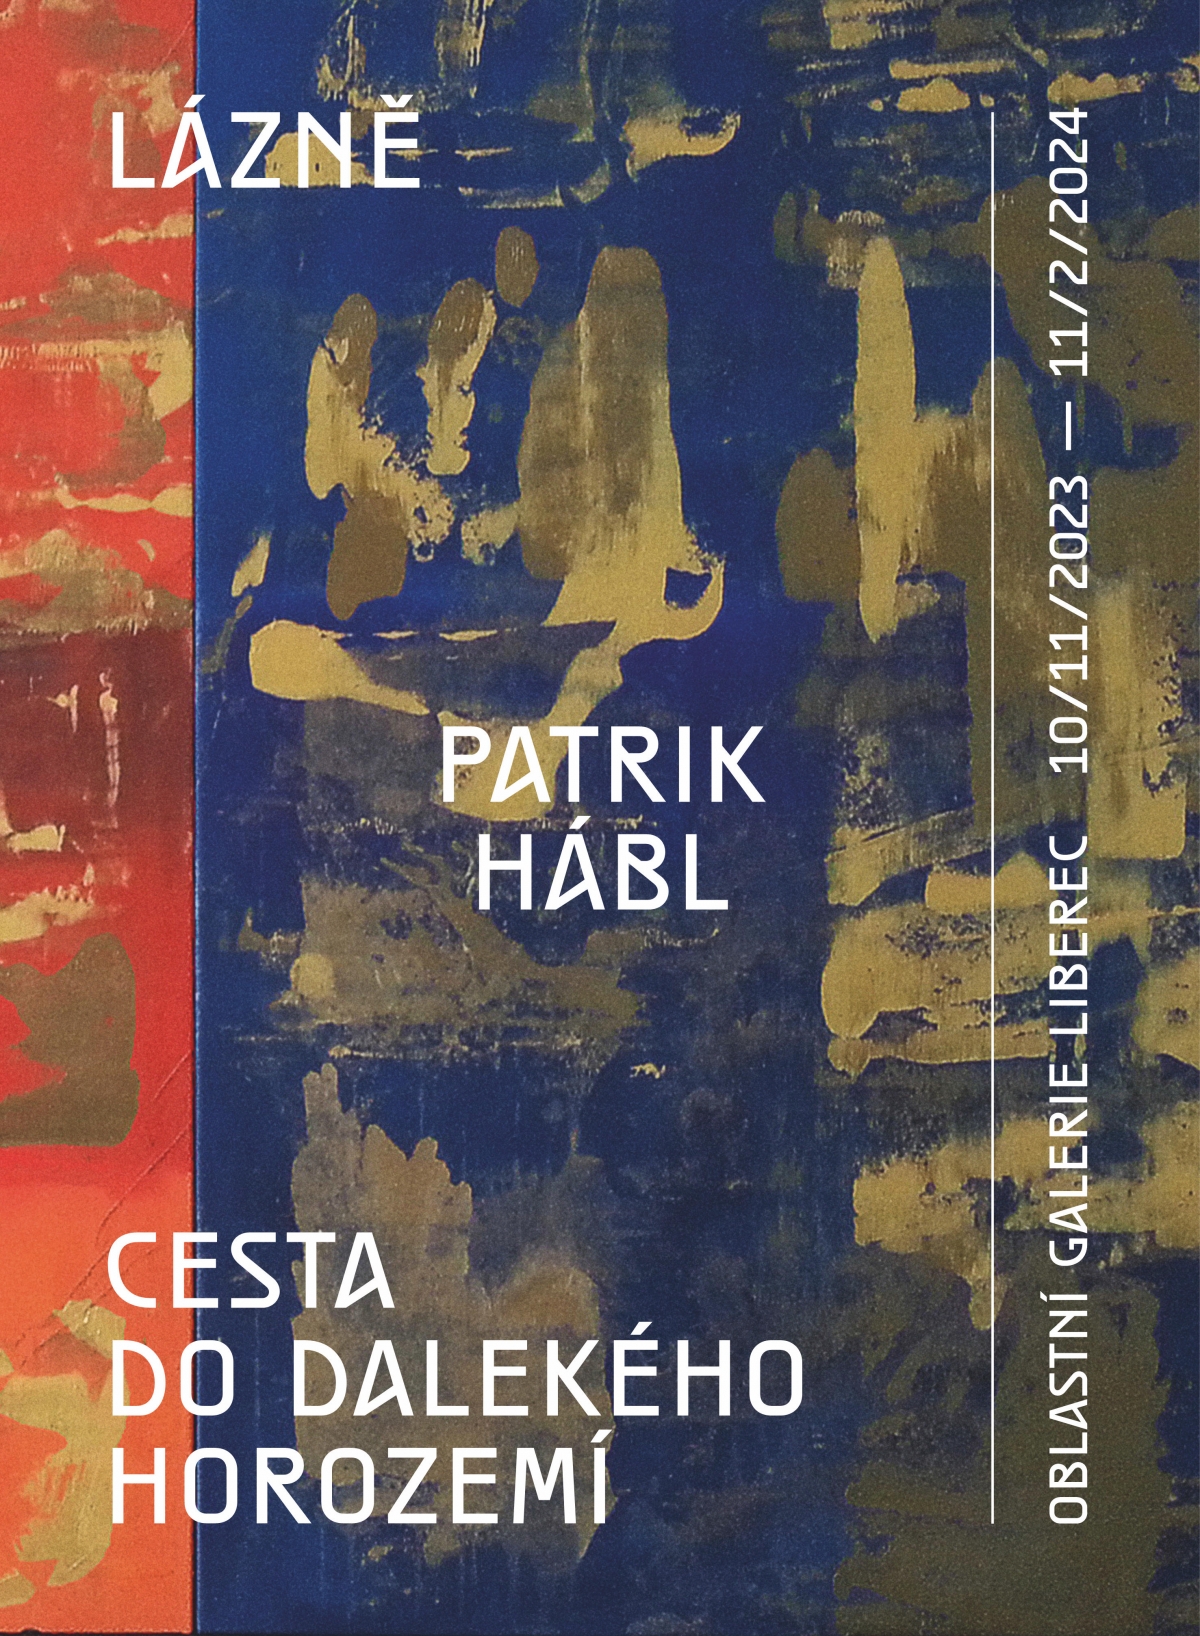 Patrik Hábl | Journey to the Deep Mountainland